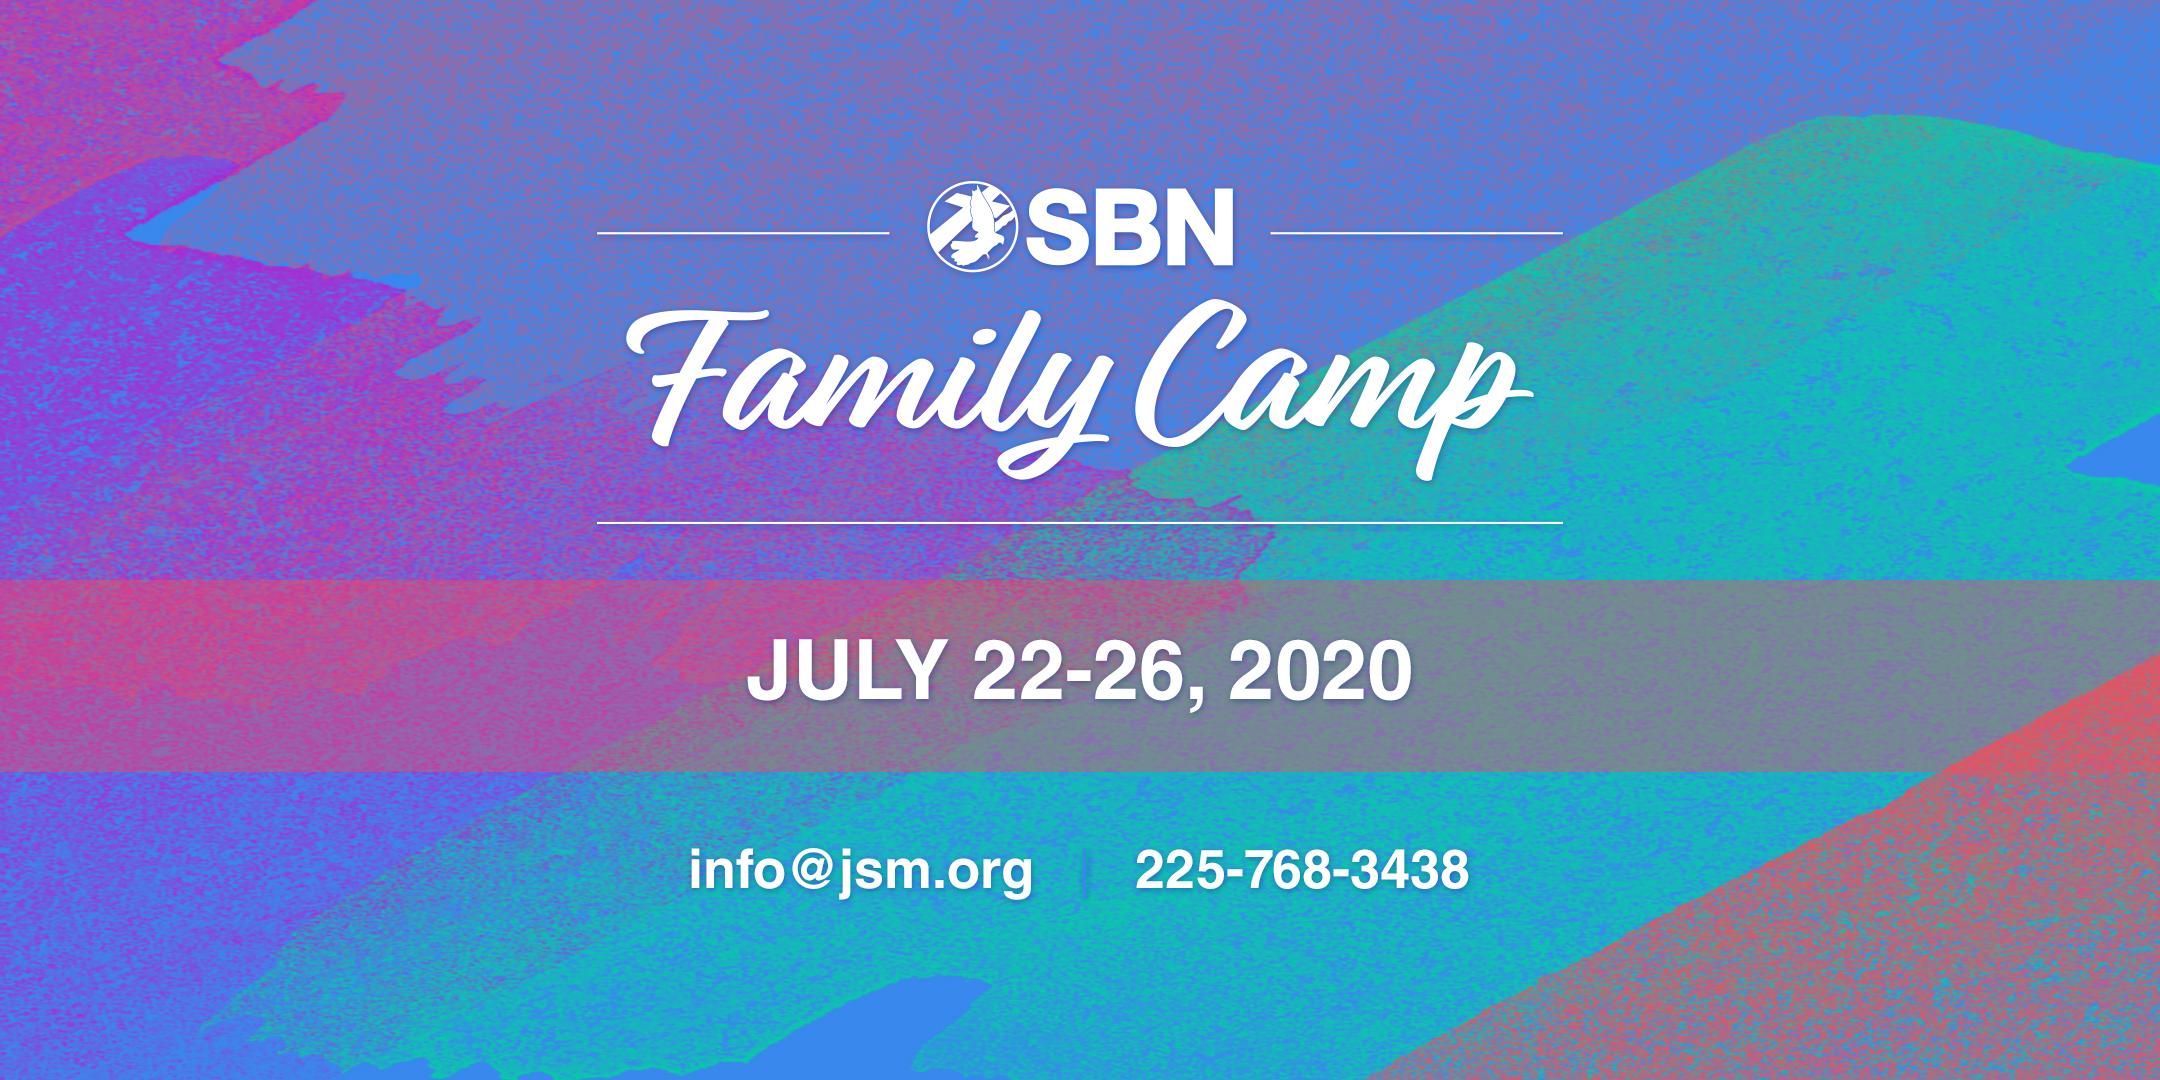 SBN Family Camp 2020 22 JUL 2020